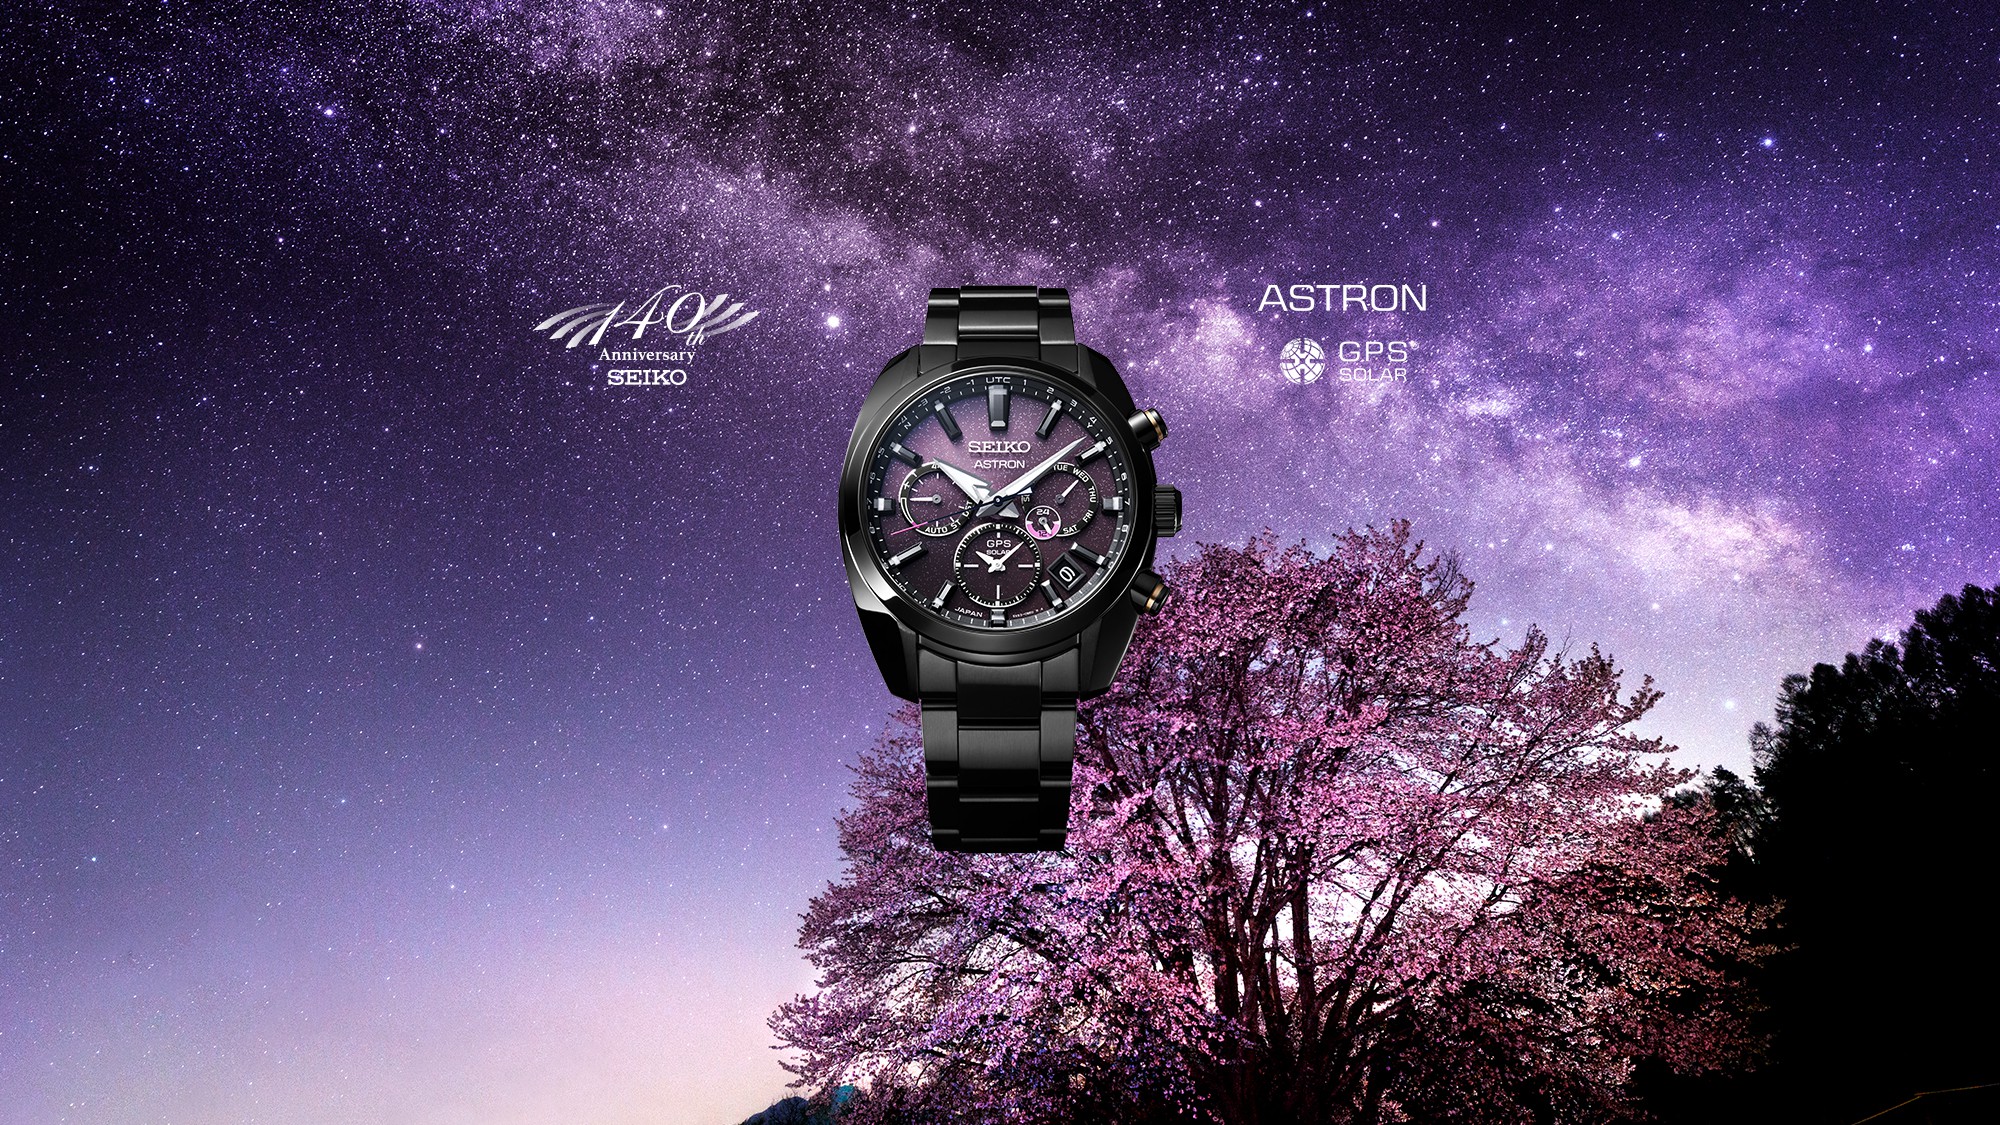 The Astron GPS Solar Seiko 140th Anniversary Limited Edition